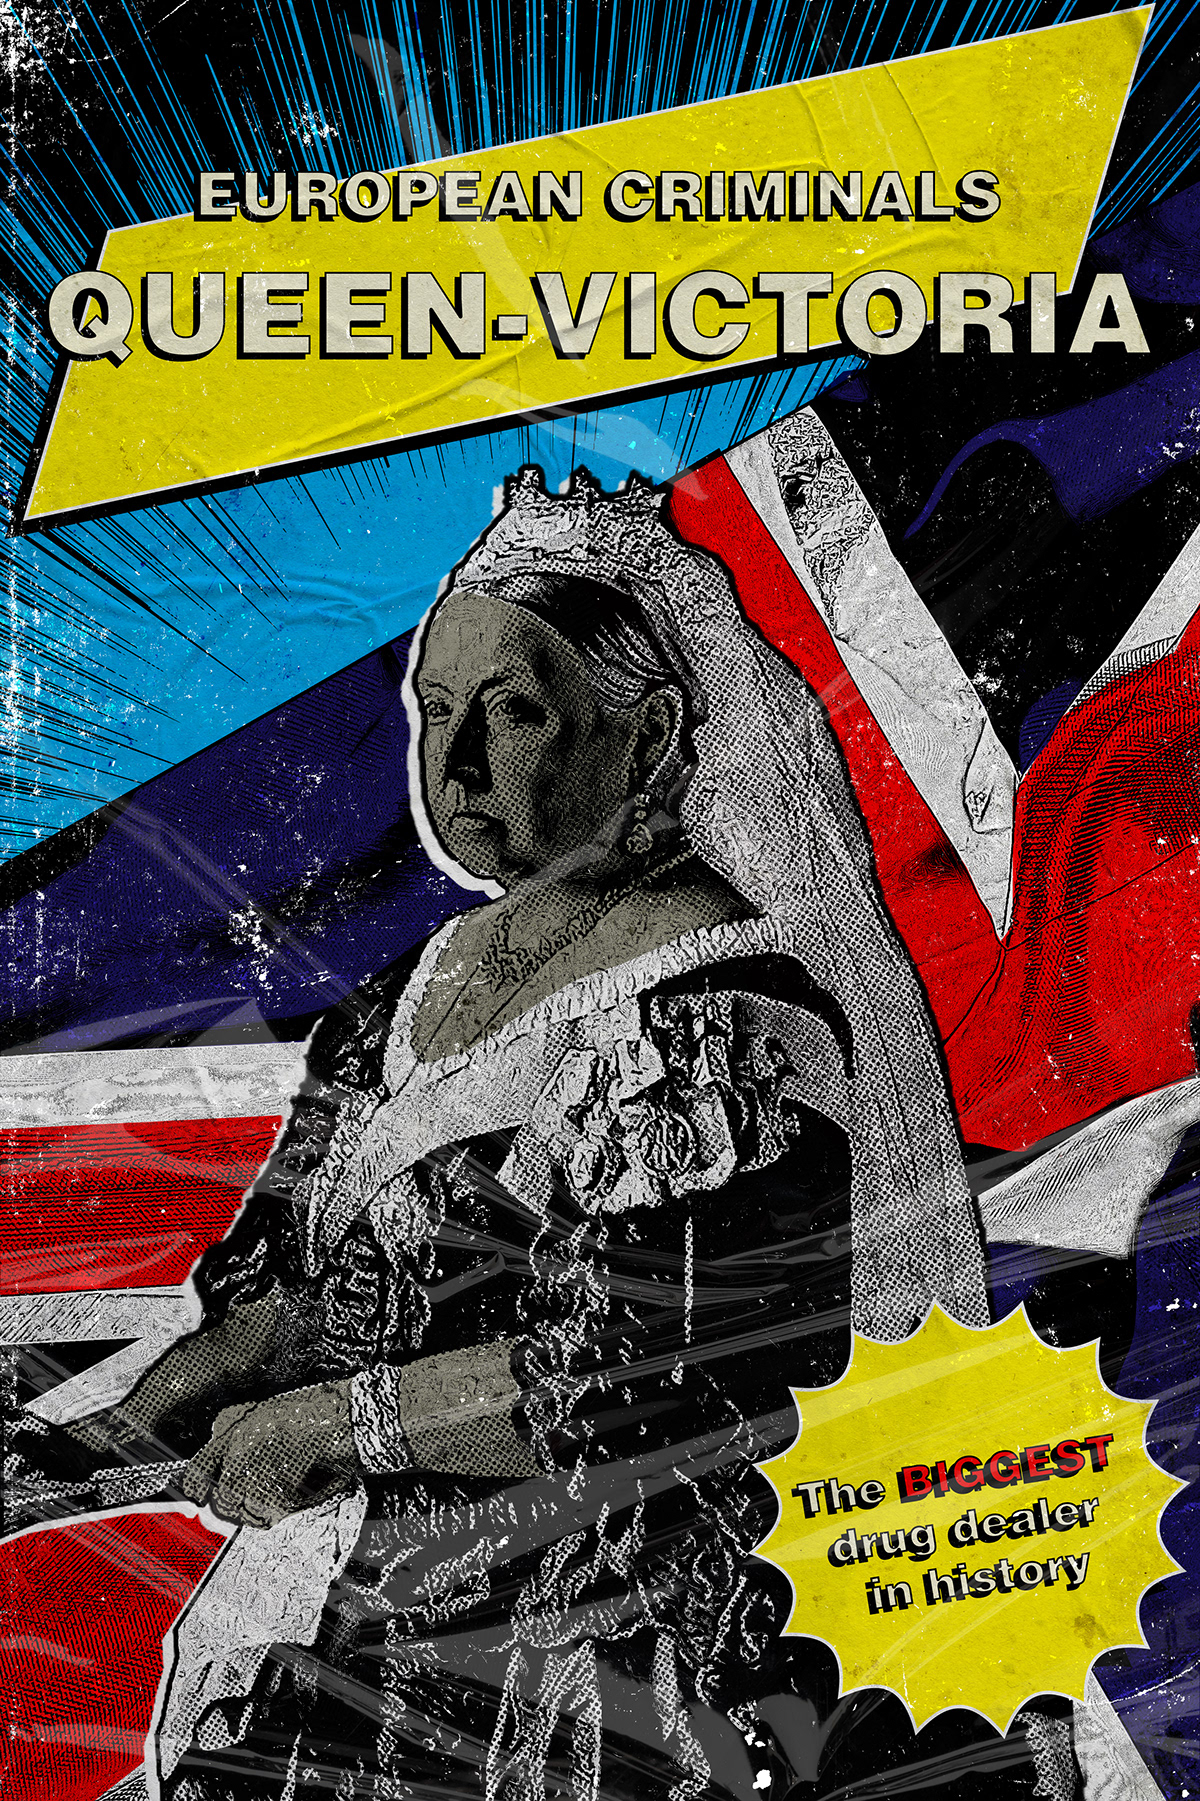 criminal digitalart posterdesign queen royalfamily